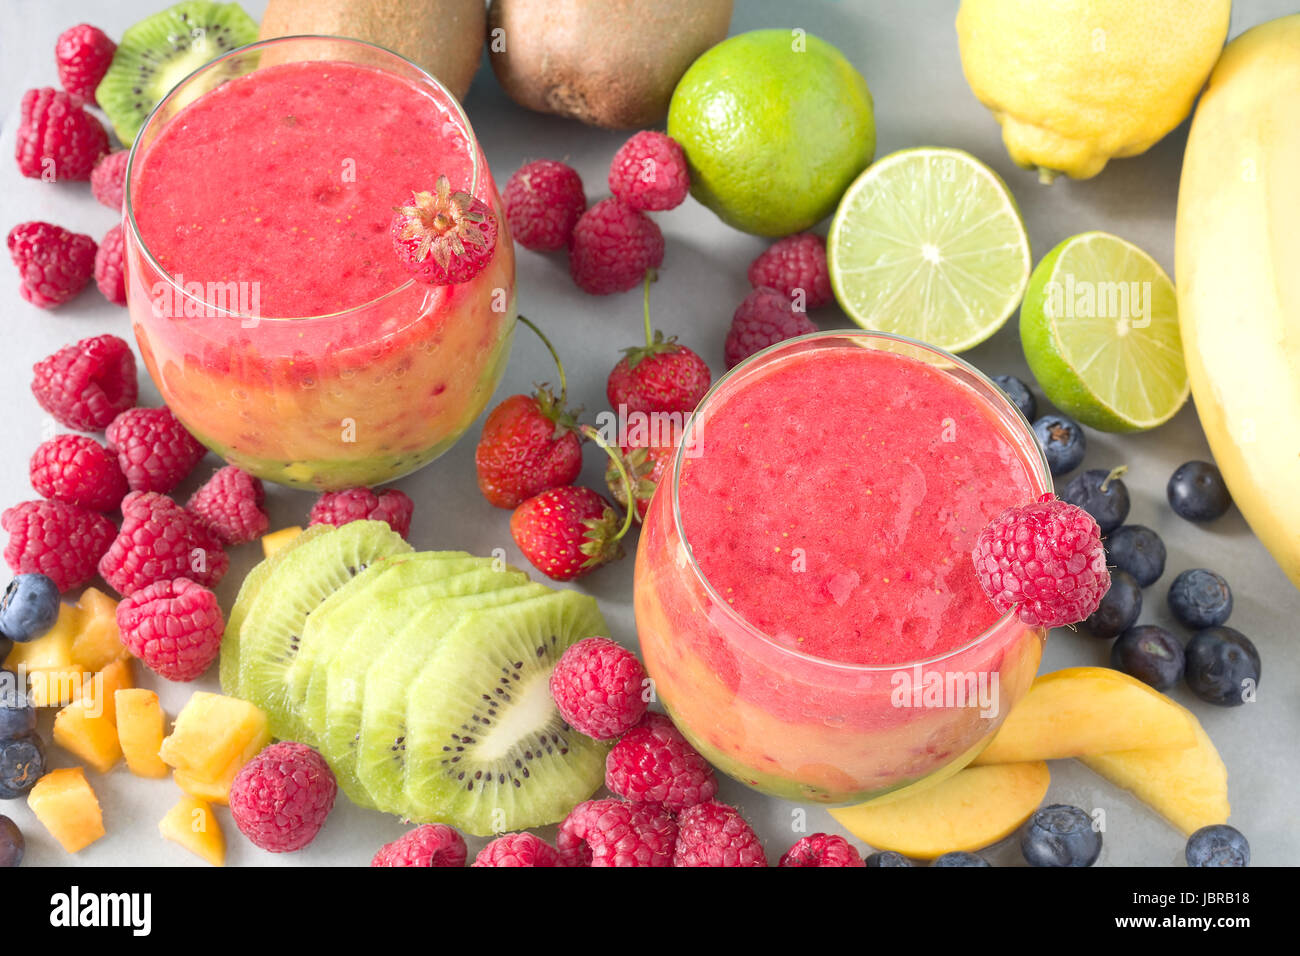 Gemischtes Frucht-Smoothie mit Himbeeren, Kiwi und Erdbeeren Stockfoto